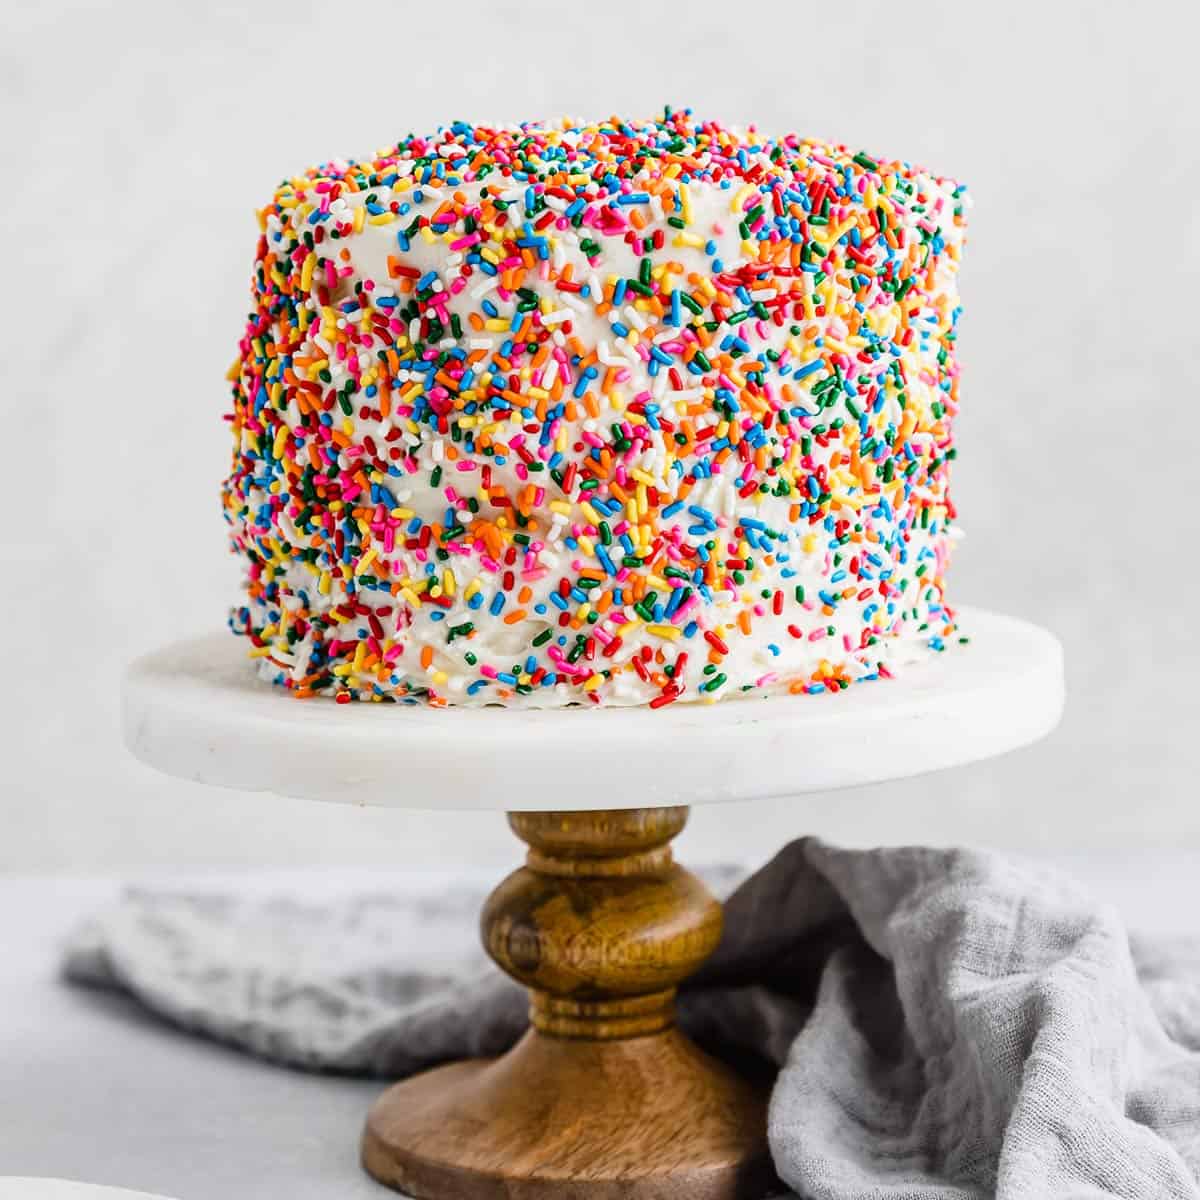 Smash Cake  America's Test Kitchen Recipe